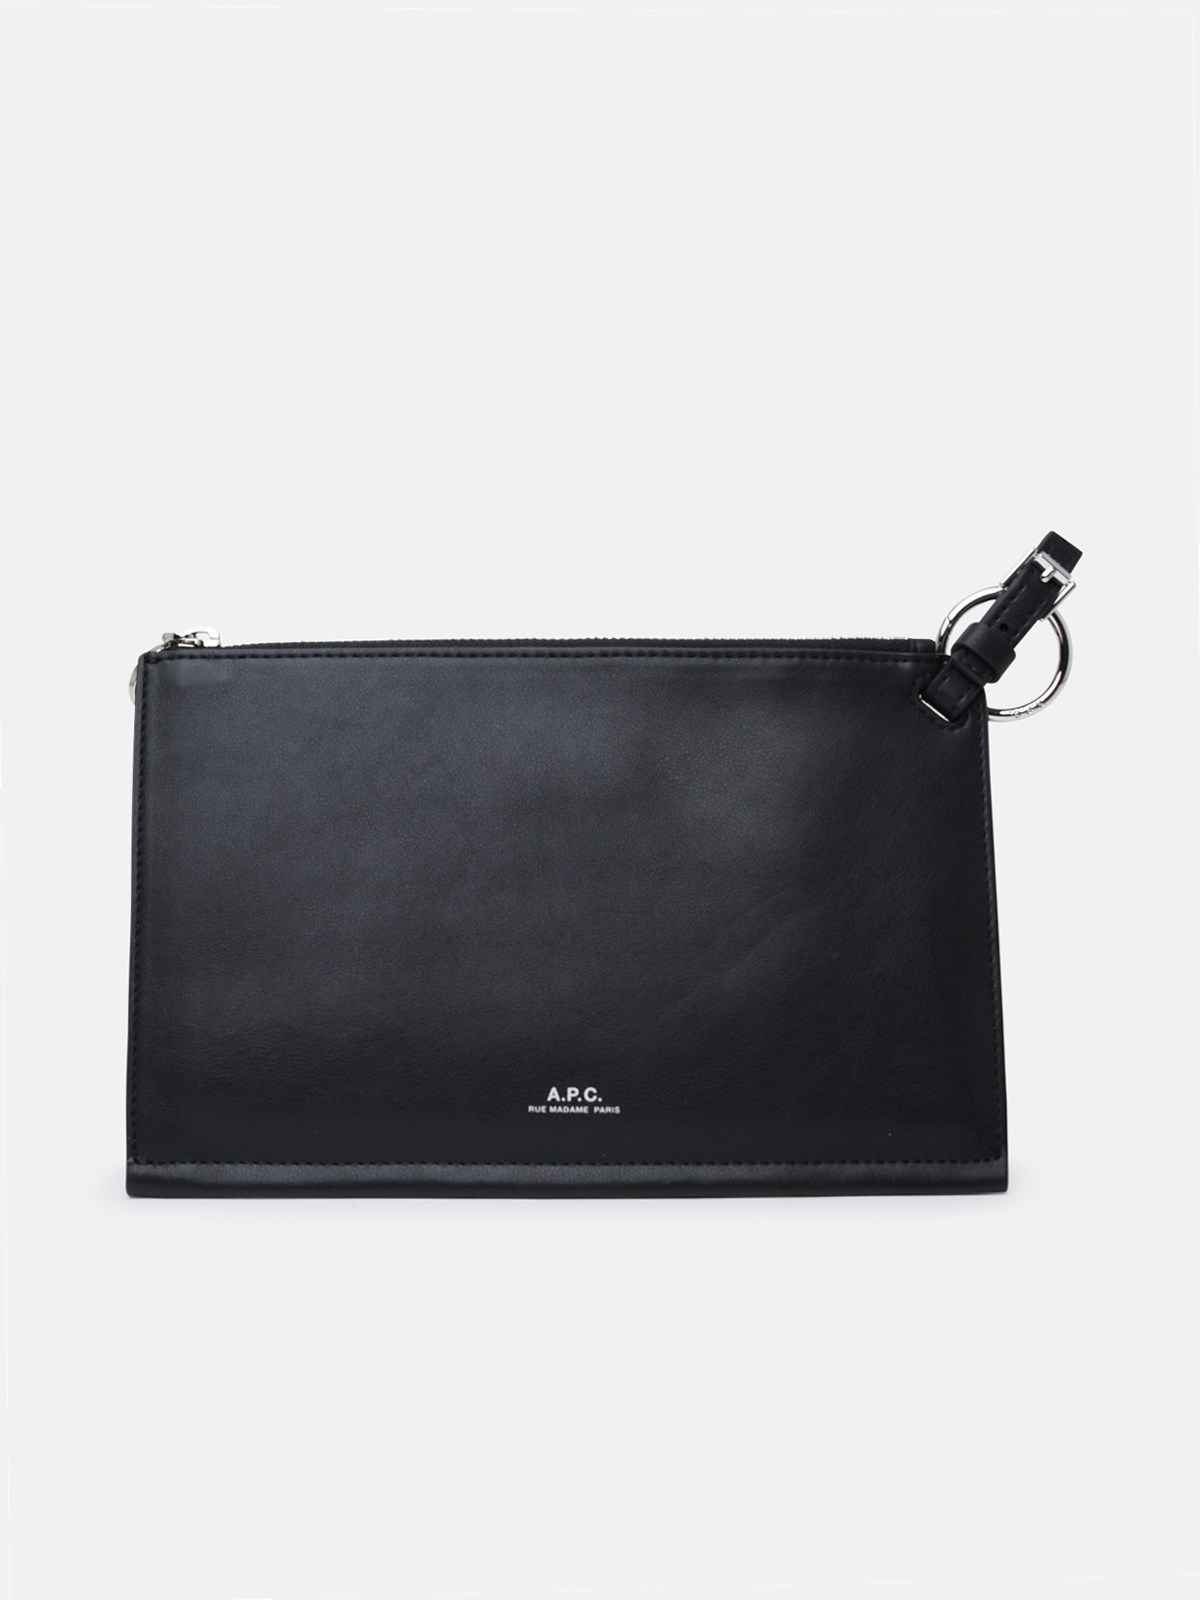 A.p.c. Black Leather Nino Flat Bag